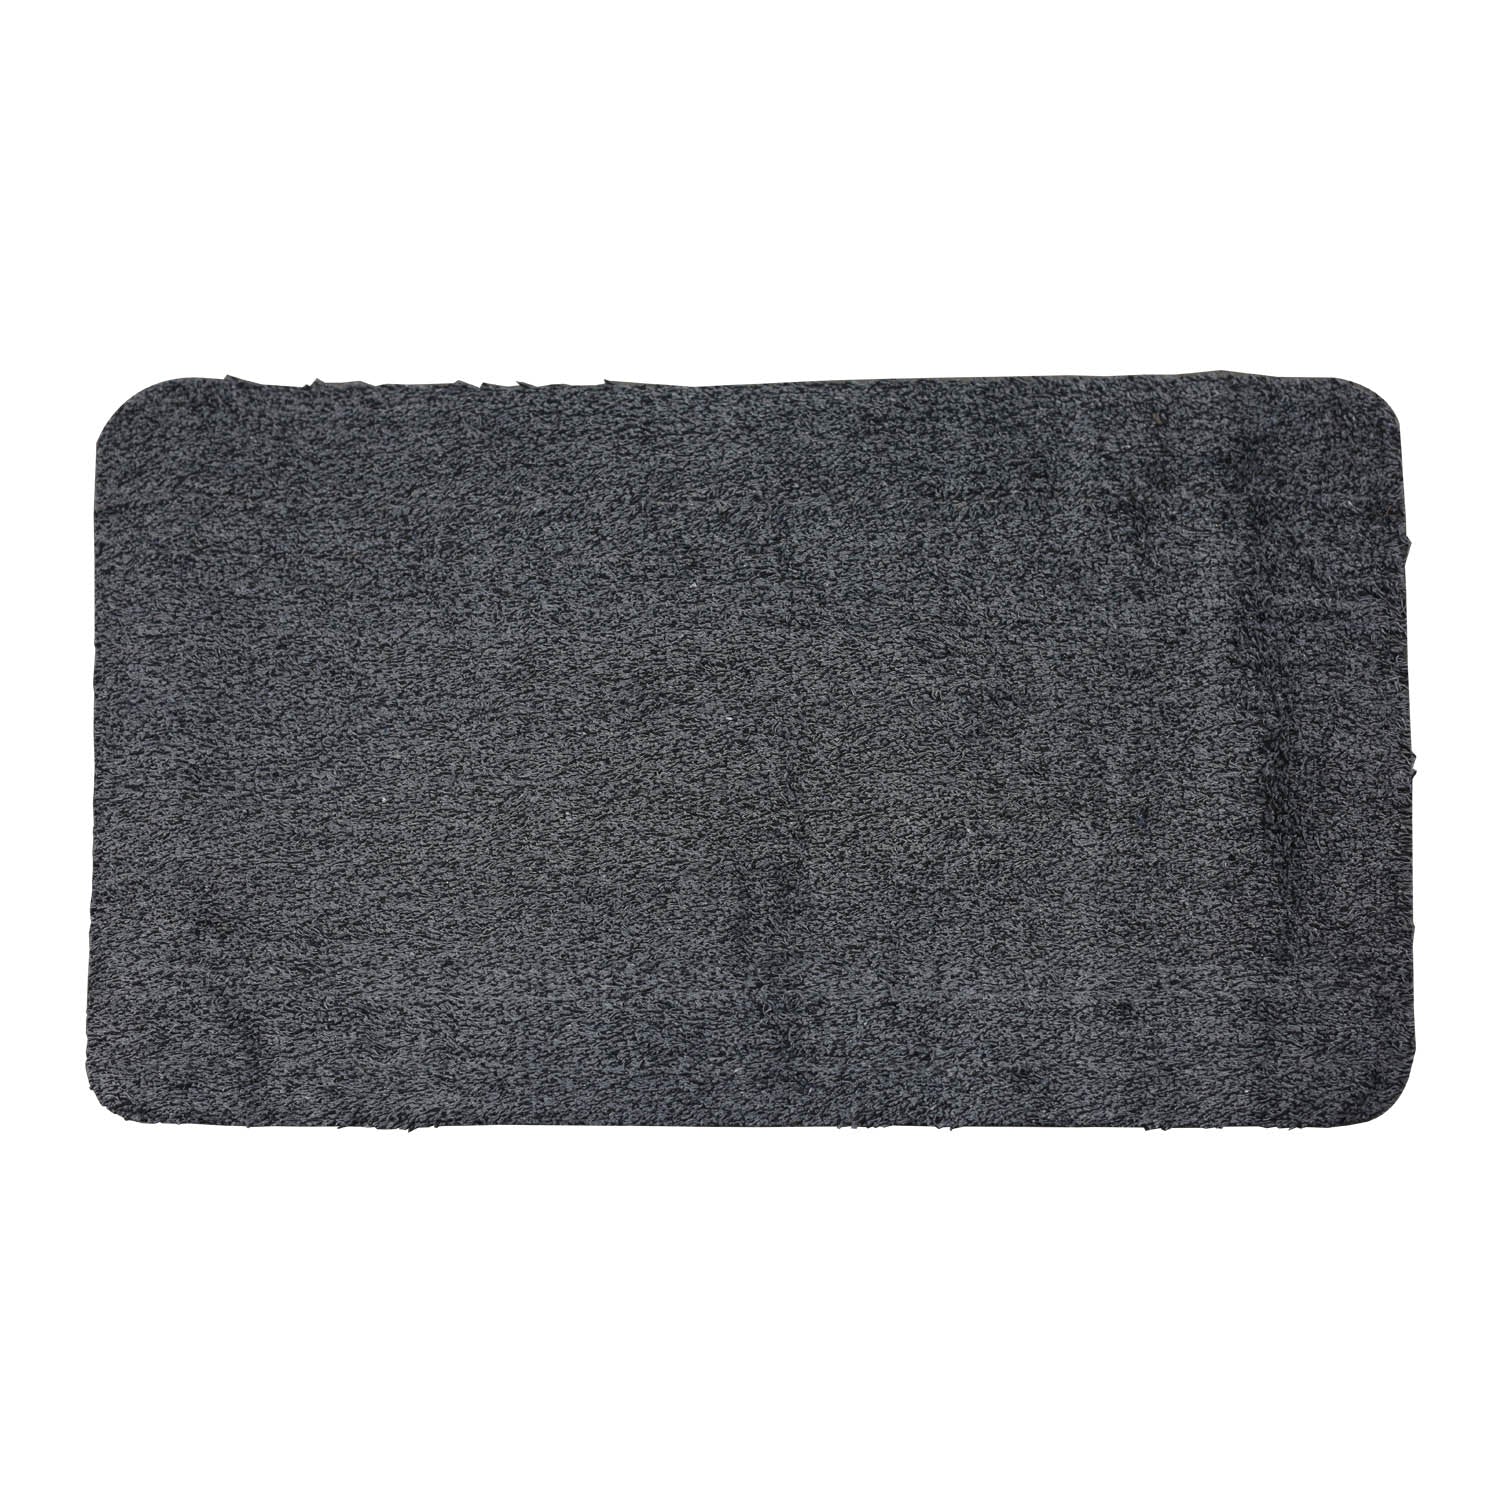 70x45cm Super Absorbent Grey Doormat